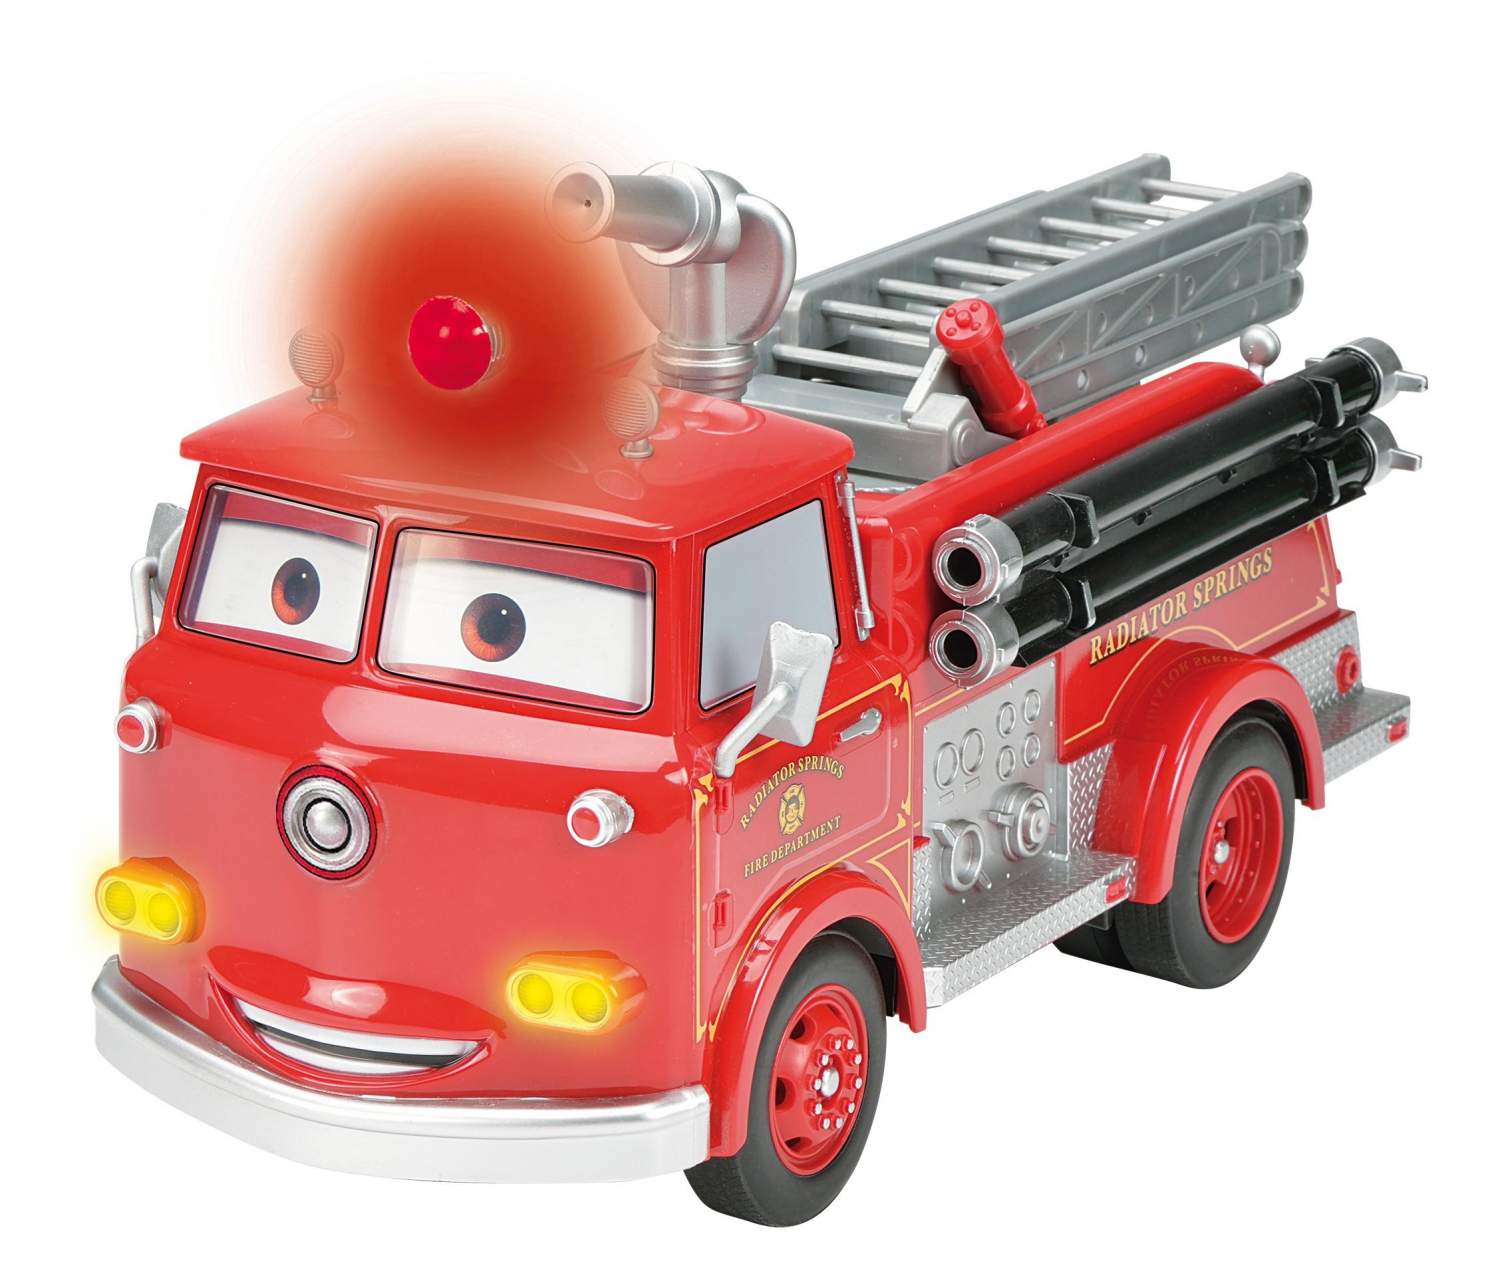 Машинки пожарная машина. Пожарная машина 5110dks. Грузовик Dickie Toys Тачки Мэтр (3089507) 1:16 29 см. Пожарная машина Red Toys. Dickie Toys пожарная машина Red.